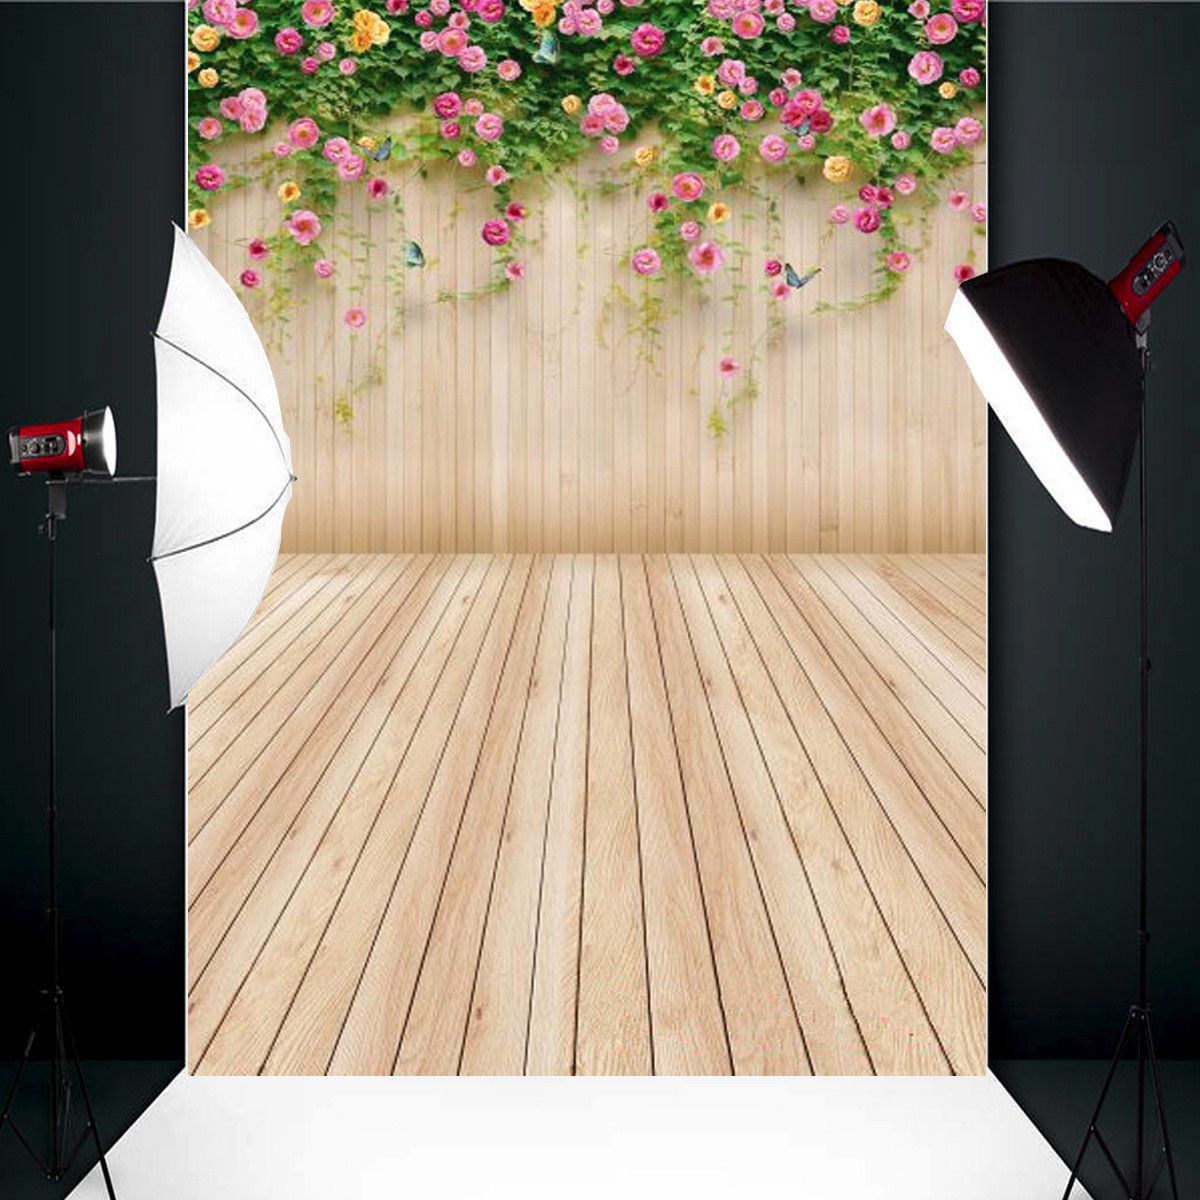 5x7ft-Vinyl-Flower-Wood-Floor-Photography-Background-Backdrop-For-Studio-Photo-Prop-Decoration-1168736